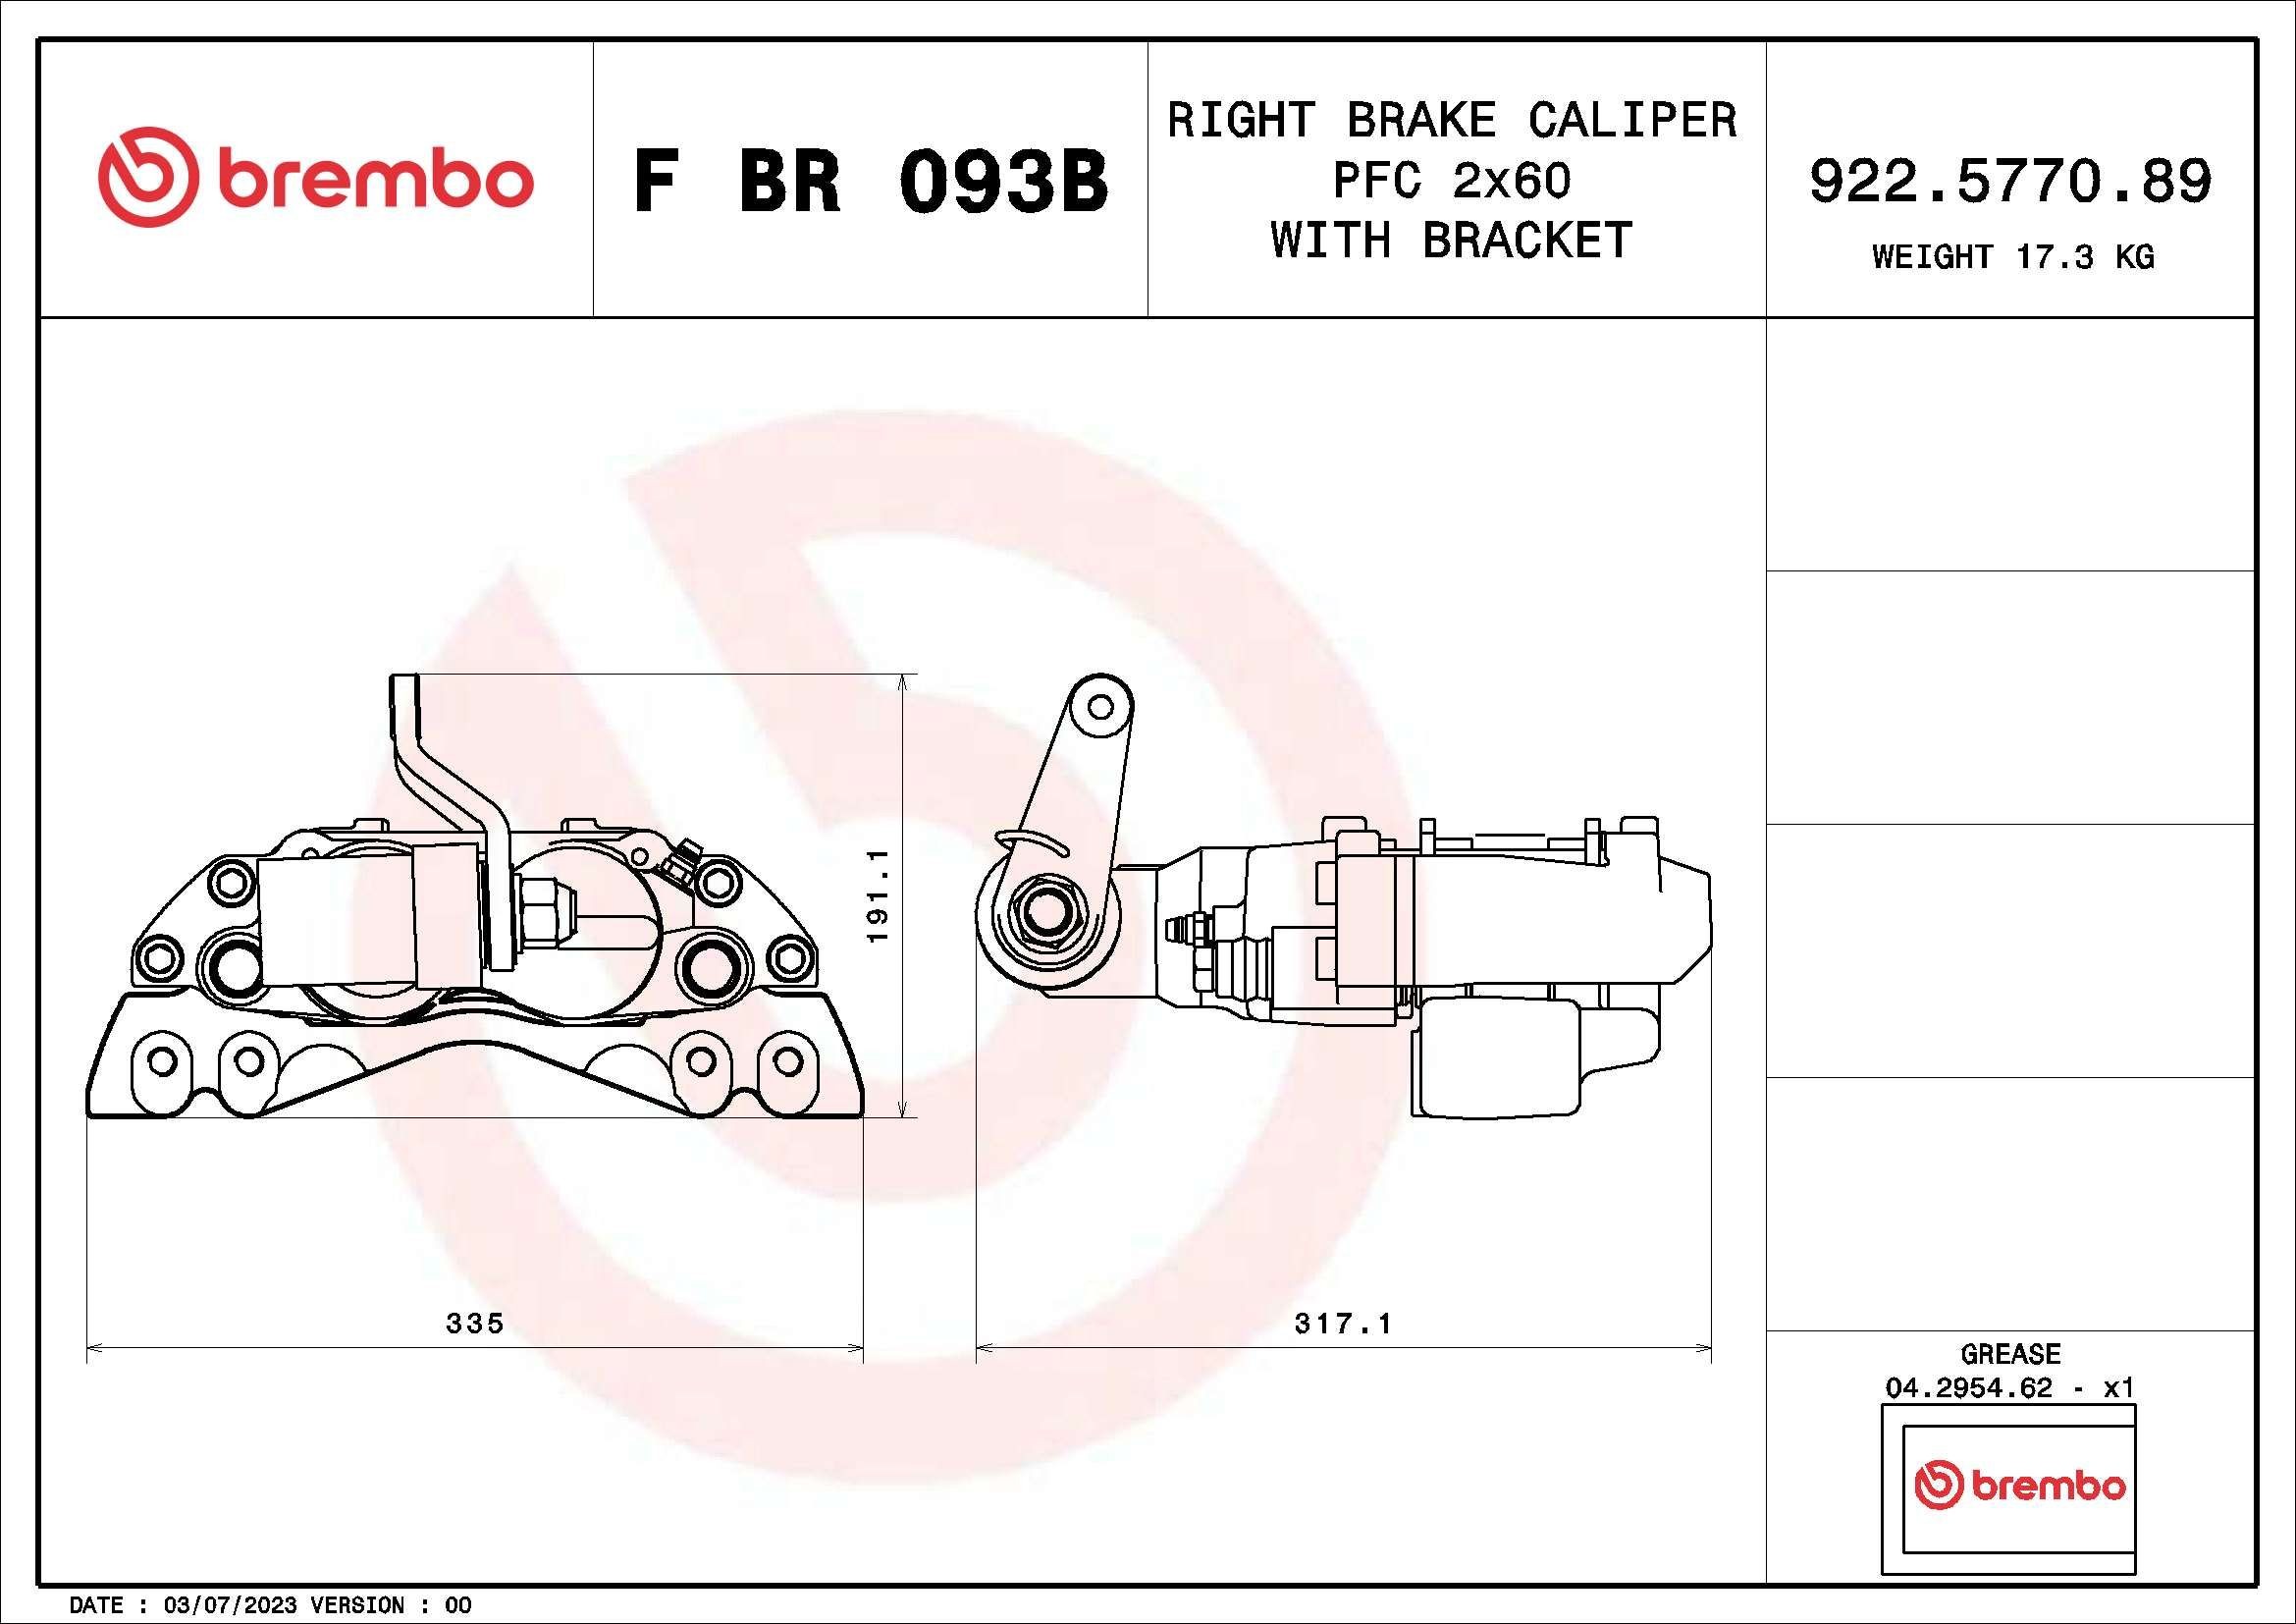 BREMBO Calipers F BR 093B